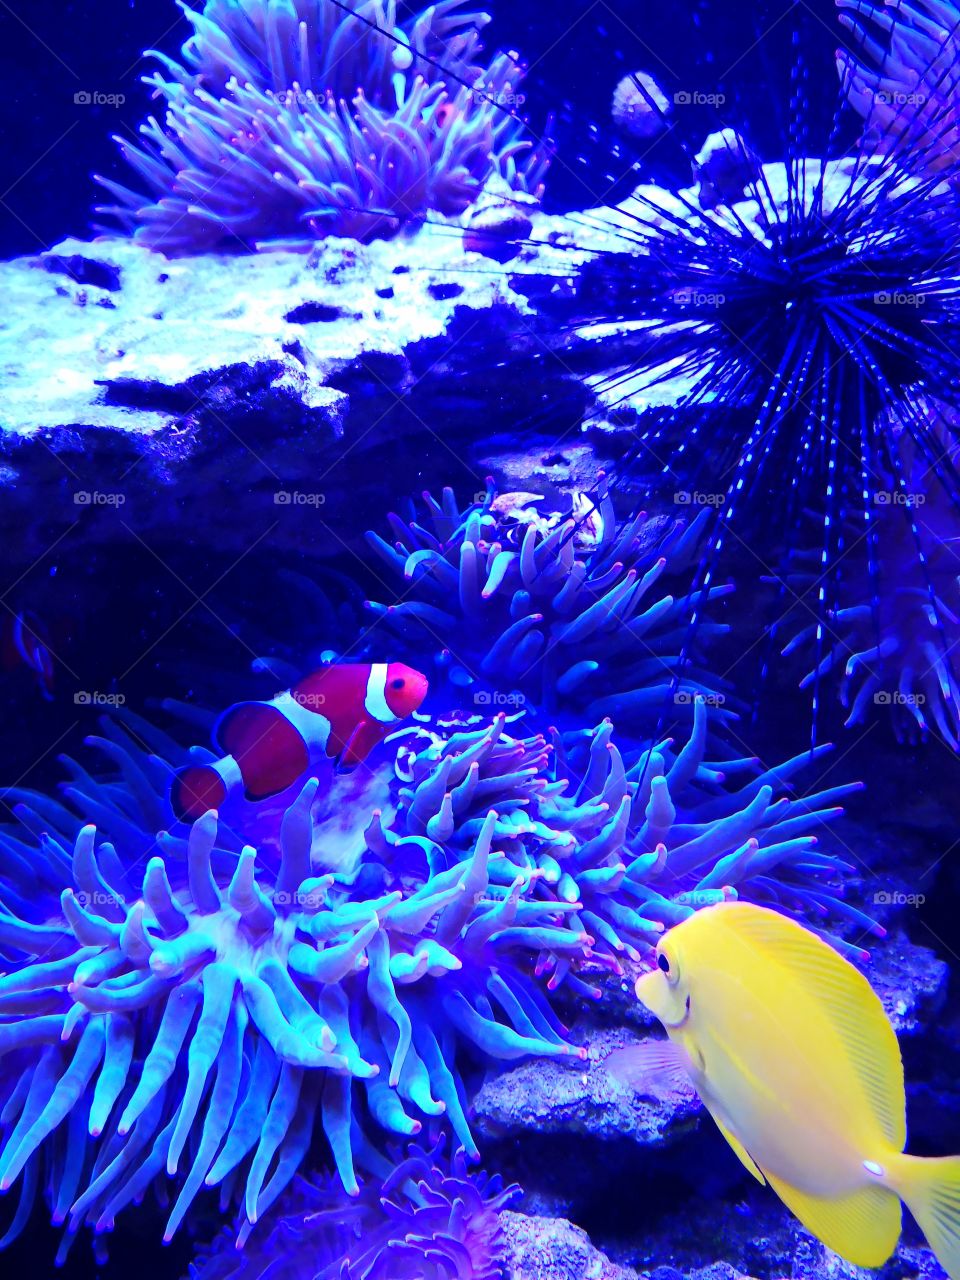 Nemo fish, also known as the clown fish